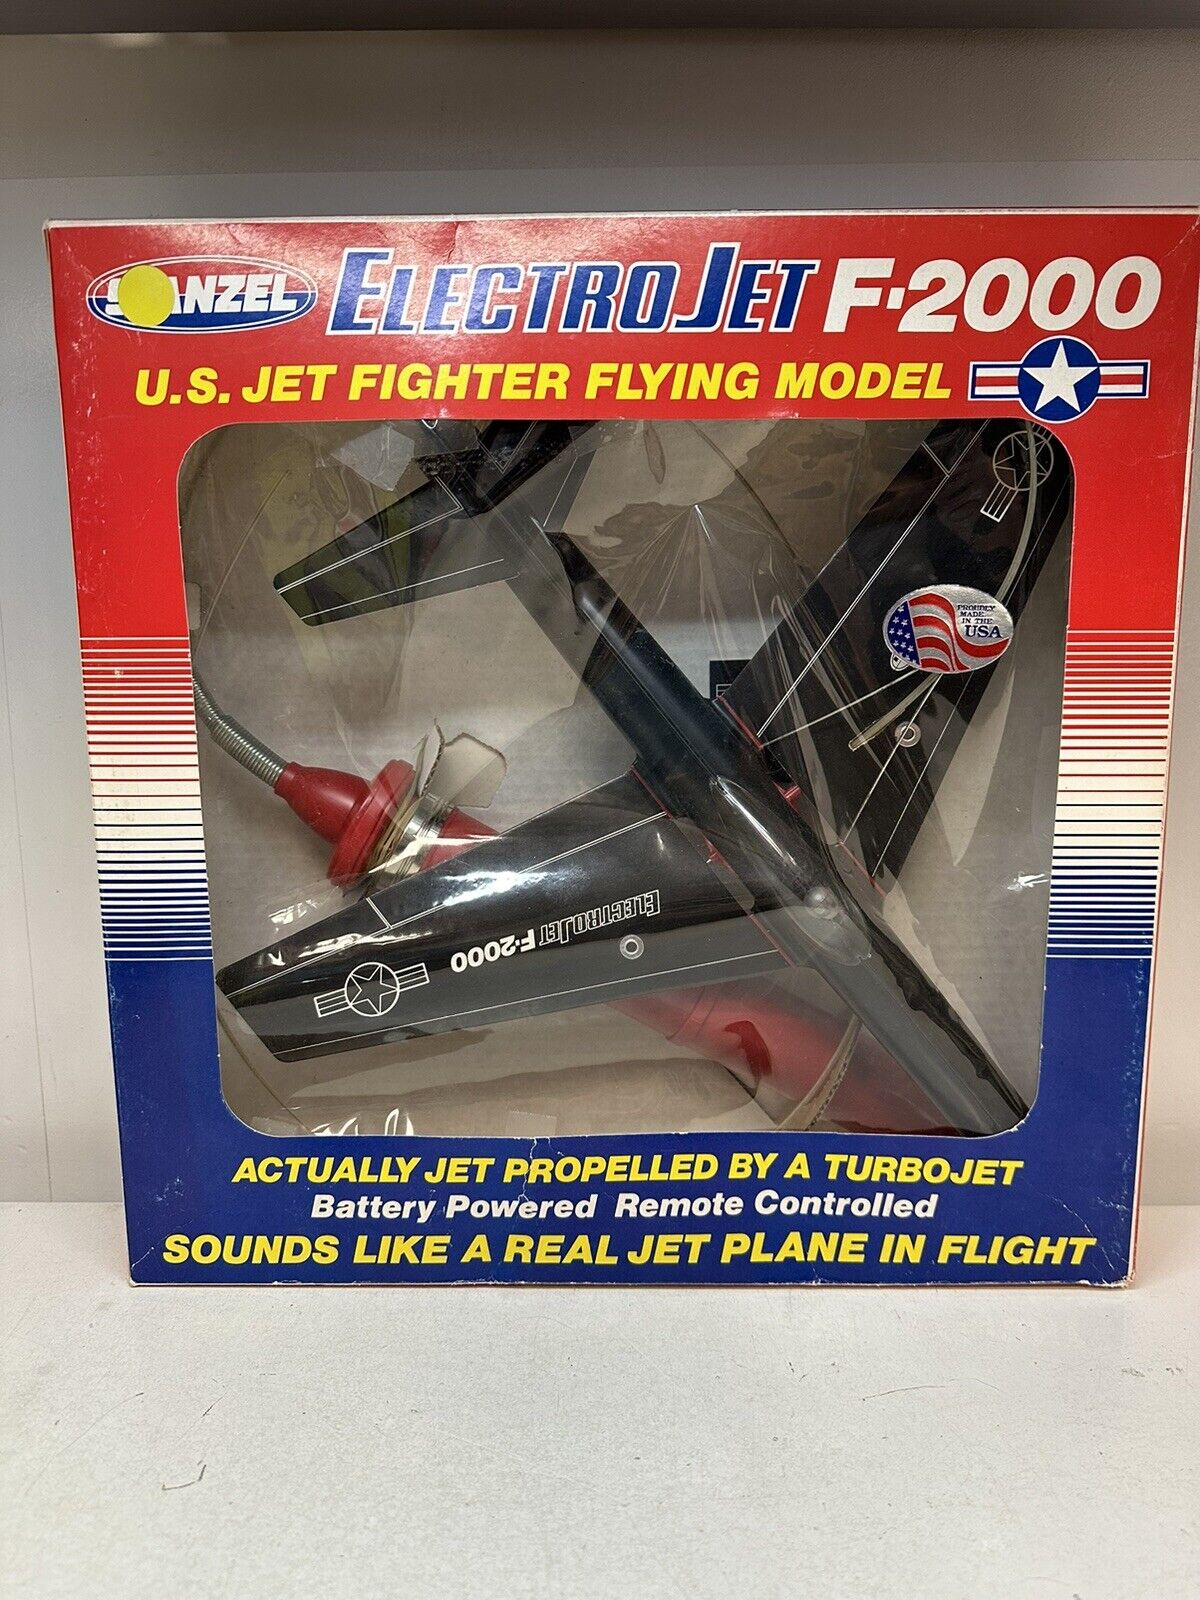 Stanzel Toy Tethered Electrojet F-2000 U.S. Navy Fighter Jet Flying Model